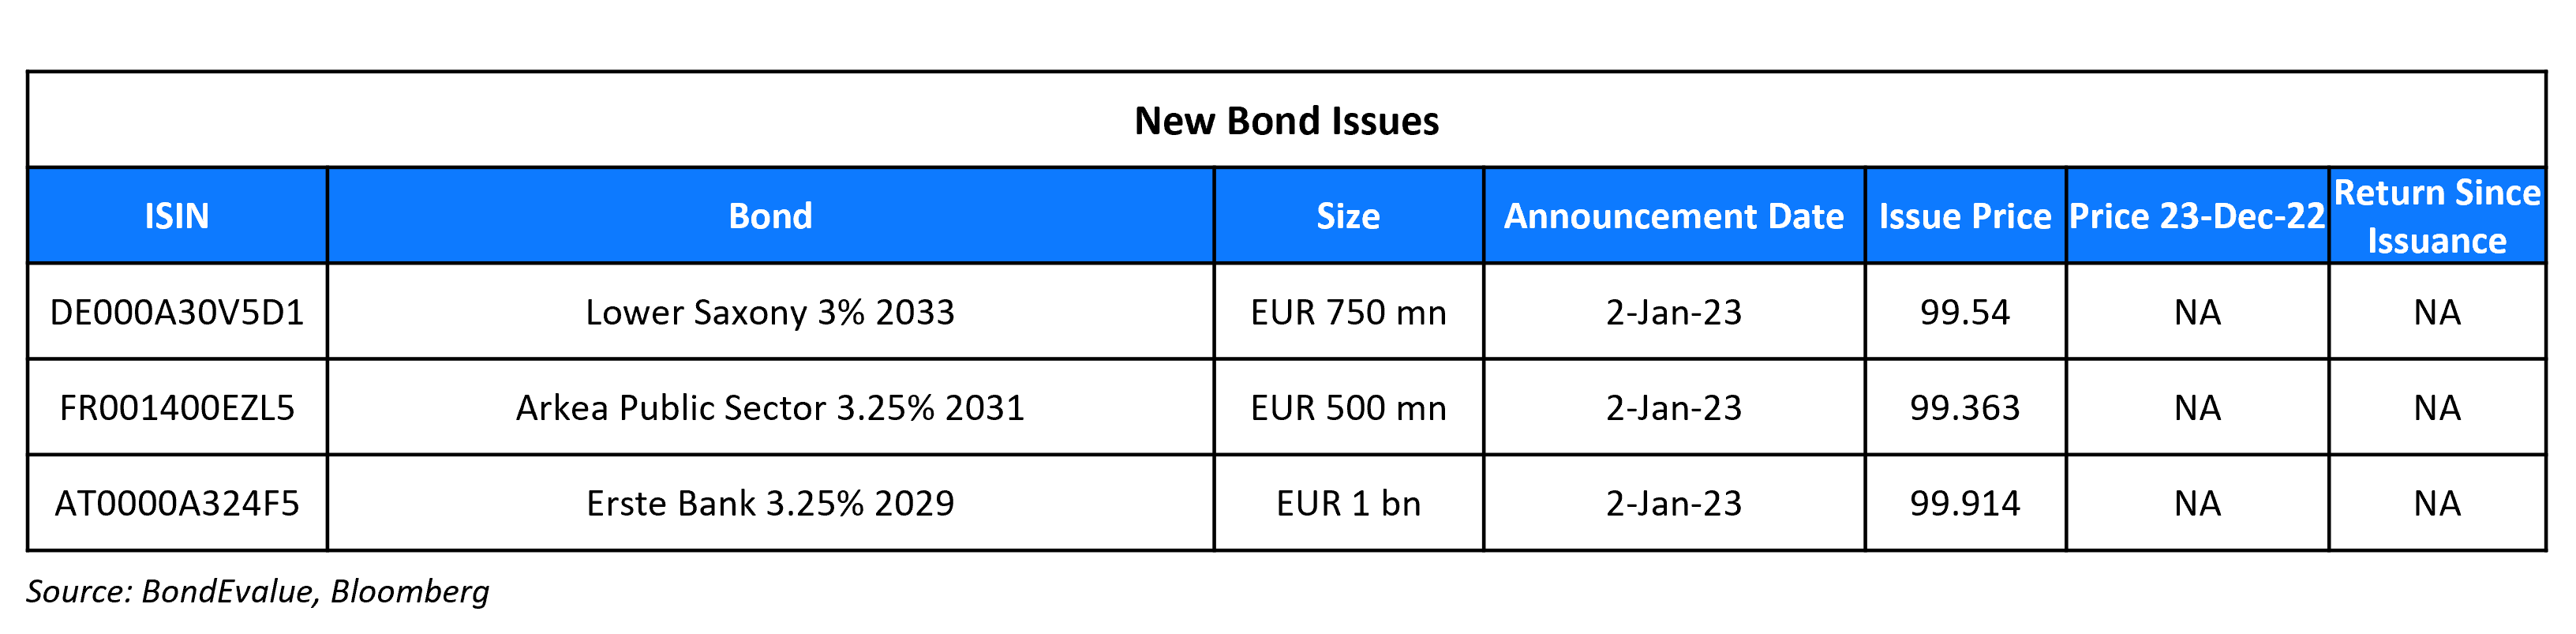 New Bond Issues 1 Jan 23 (1)